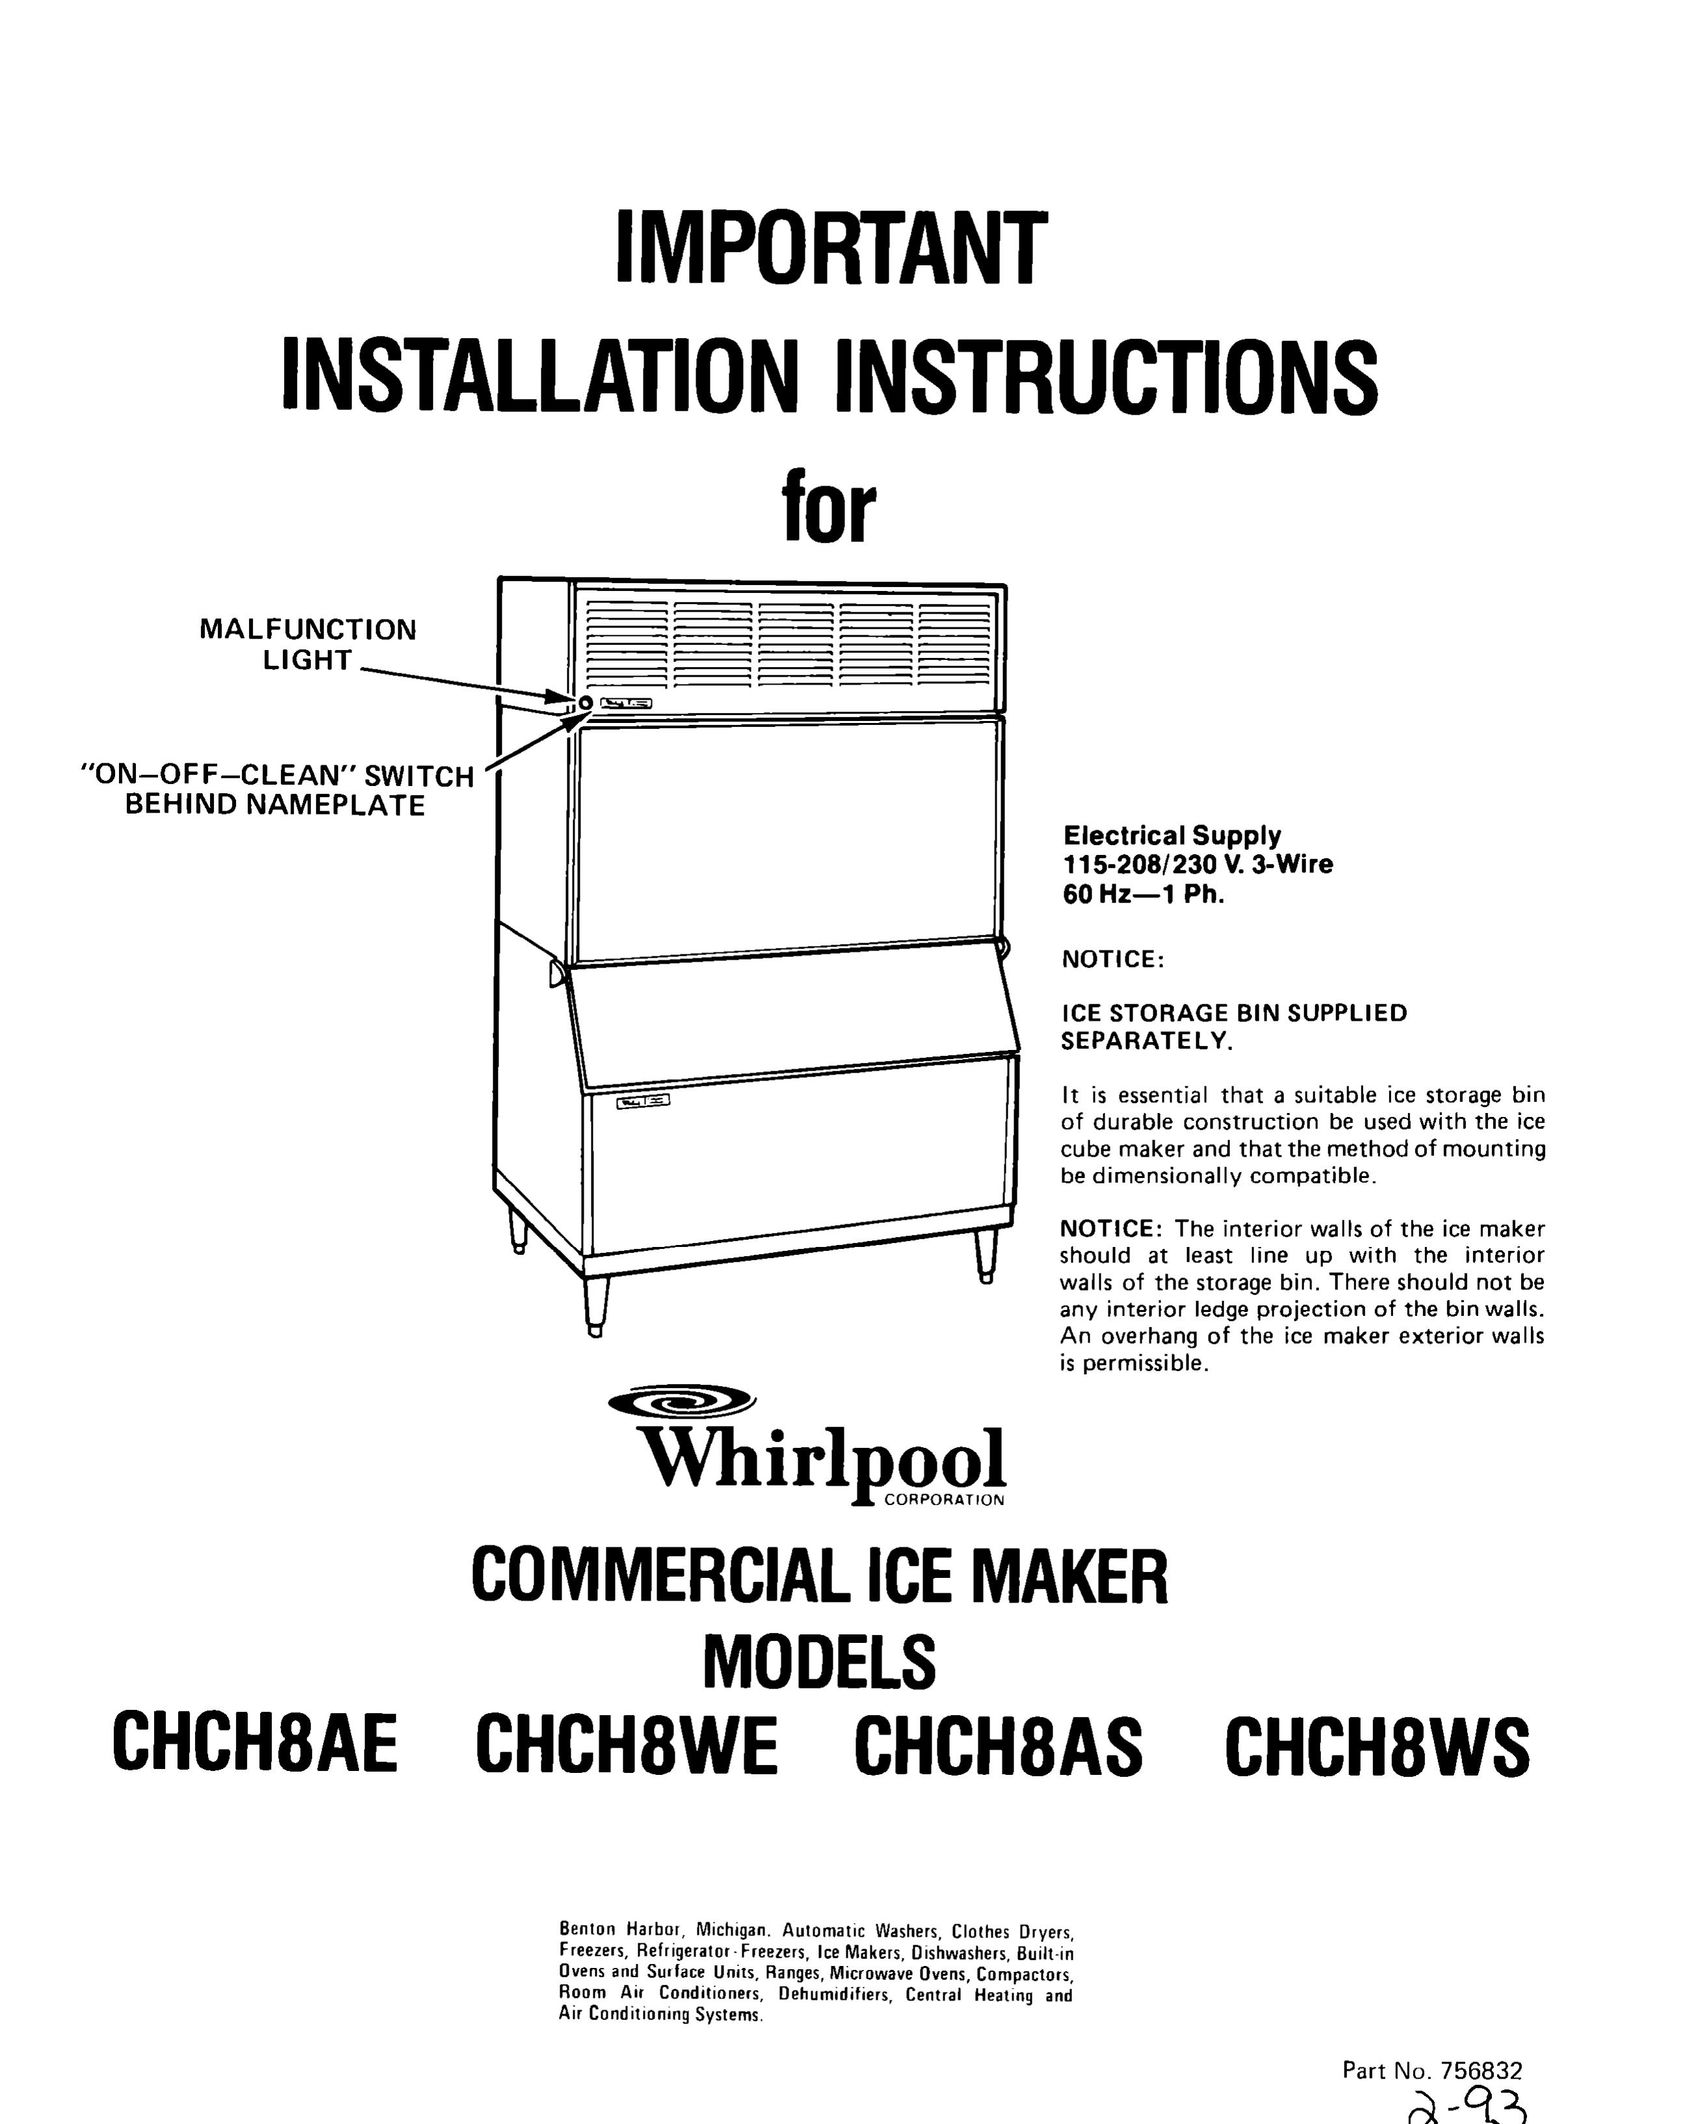 Whirlpool CHCH8AS Ice Maker User Manual